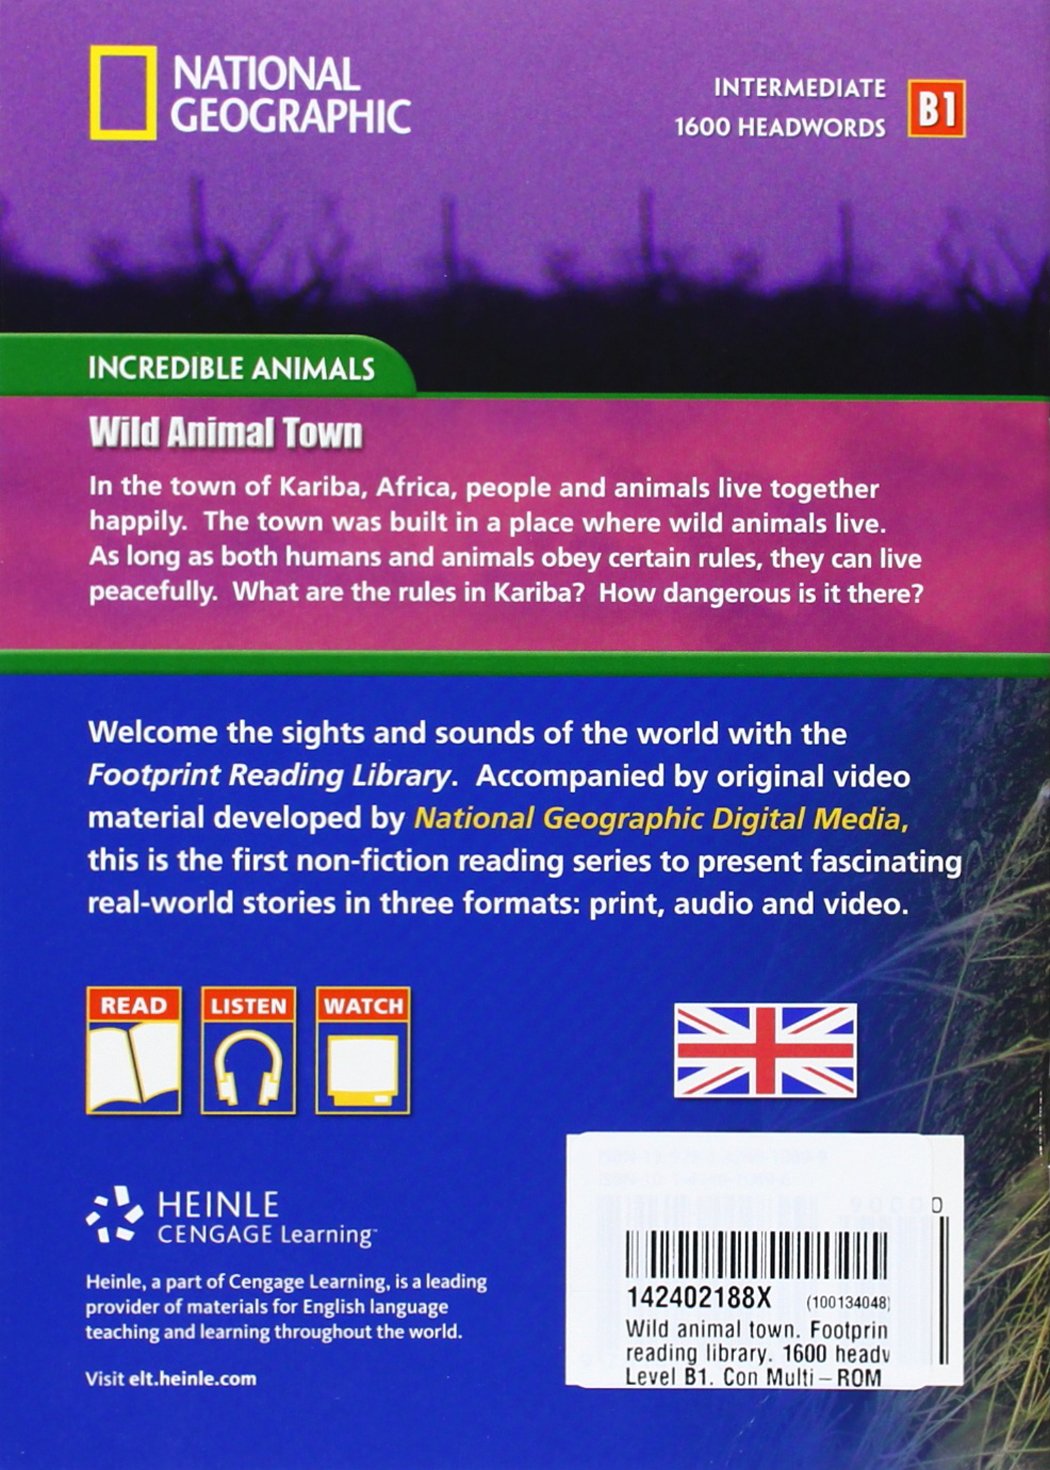 Headwords　ISBN　Wild　9781424010899　Animal　Reading　интернет-магазине　Library　купить　недорого　в　(B1)　Footprint　Town　1600　RELOD